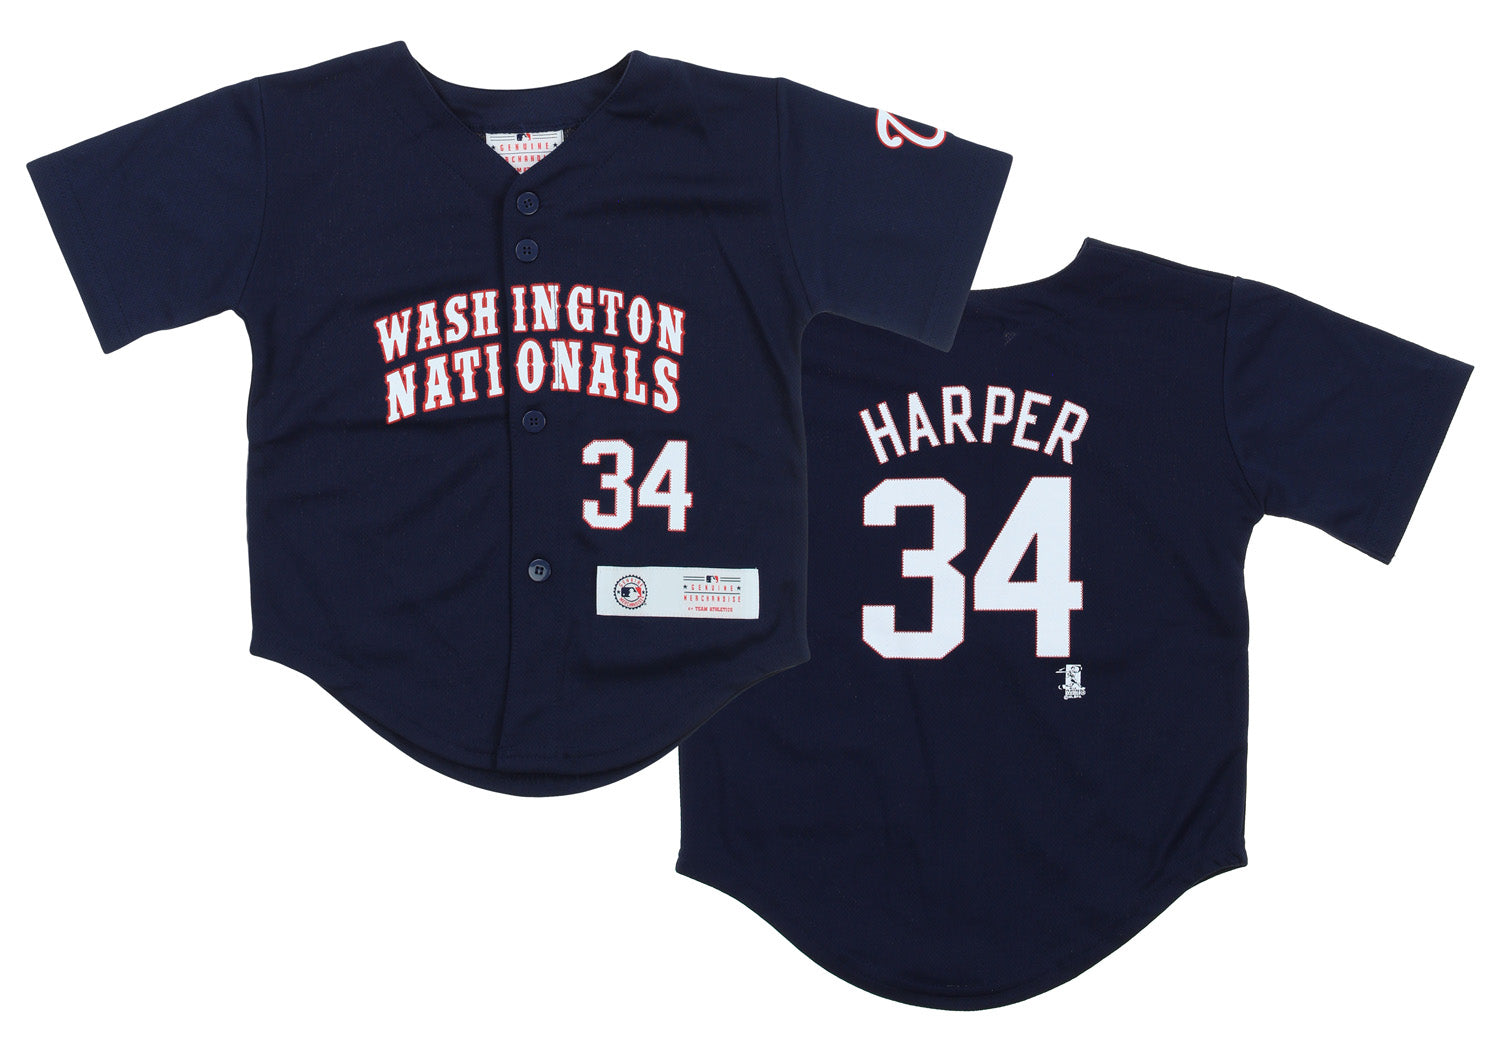 Washington Nationals MLB SEWN Navy Jersey - Harper 34 Size XL by